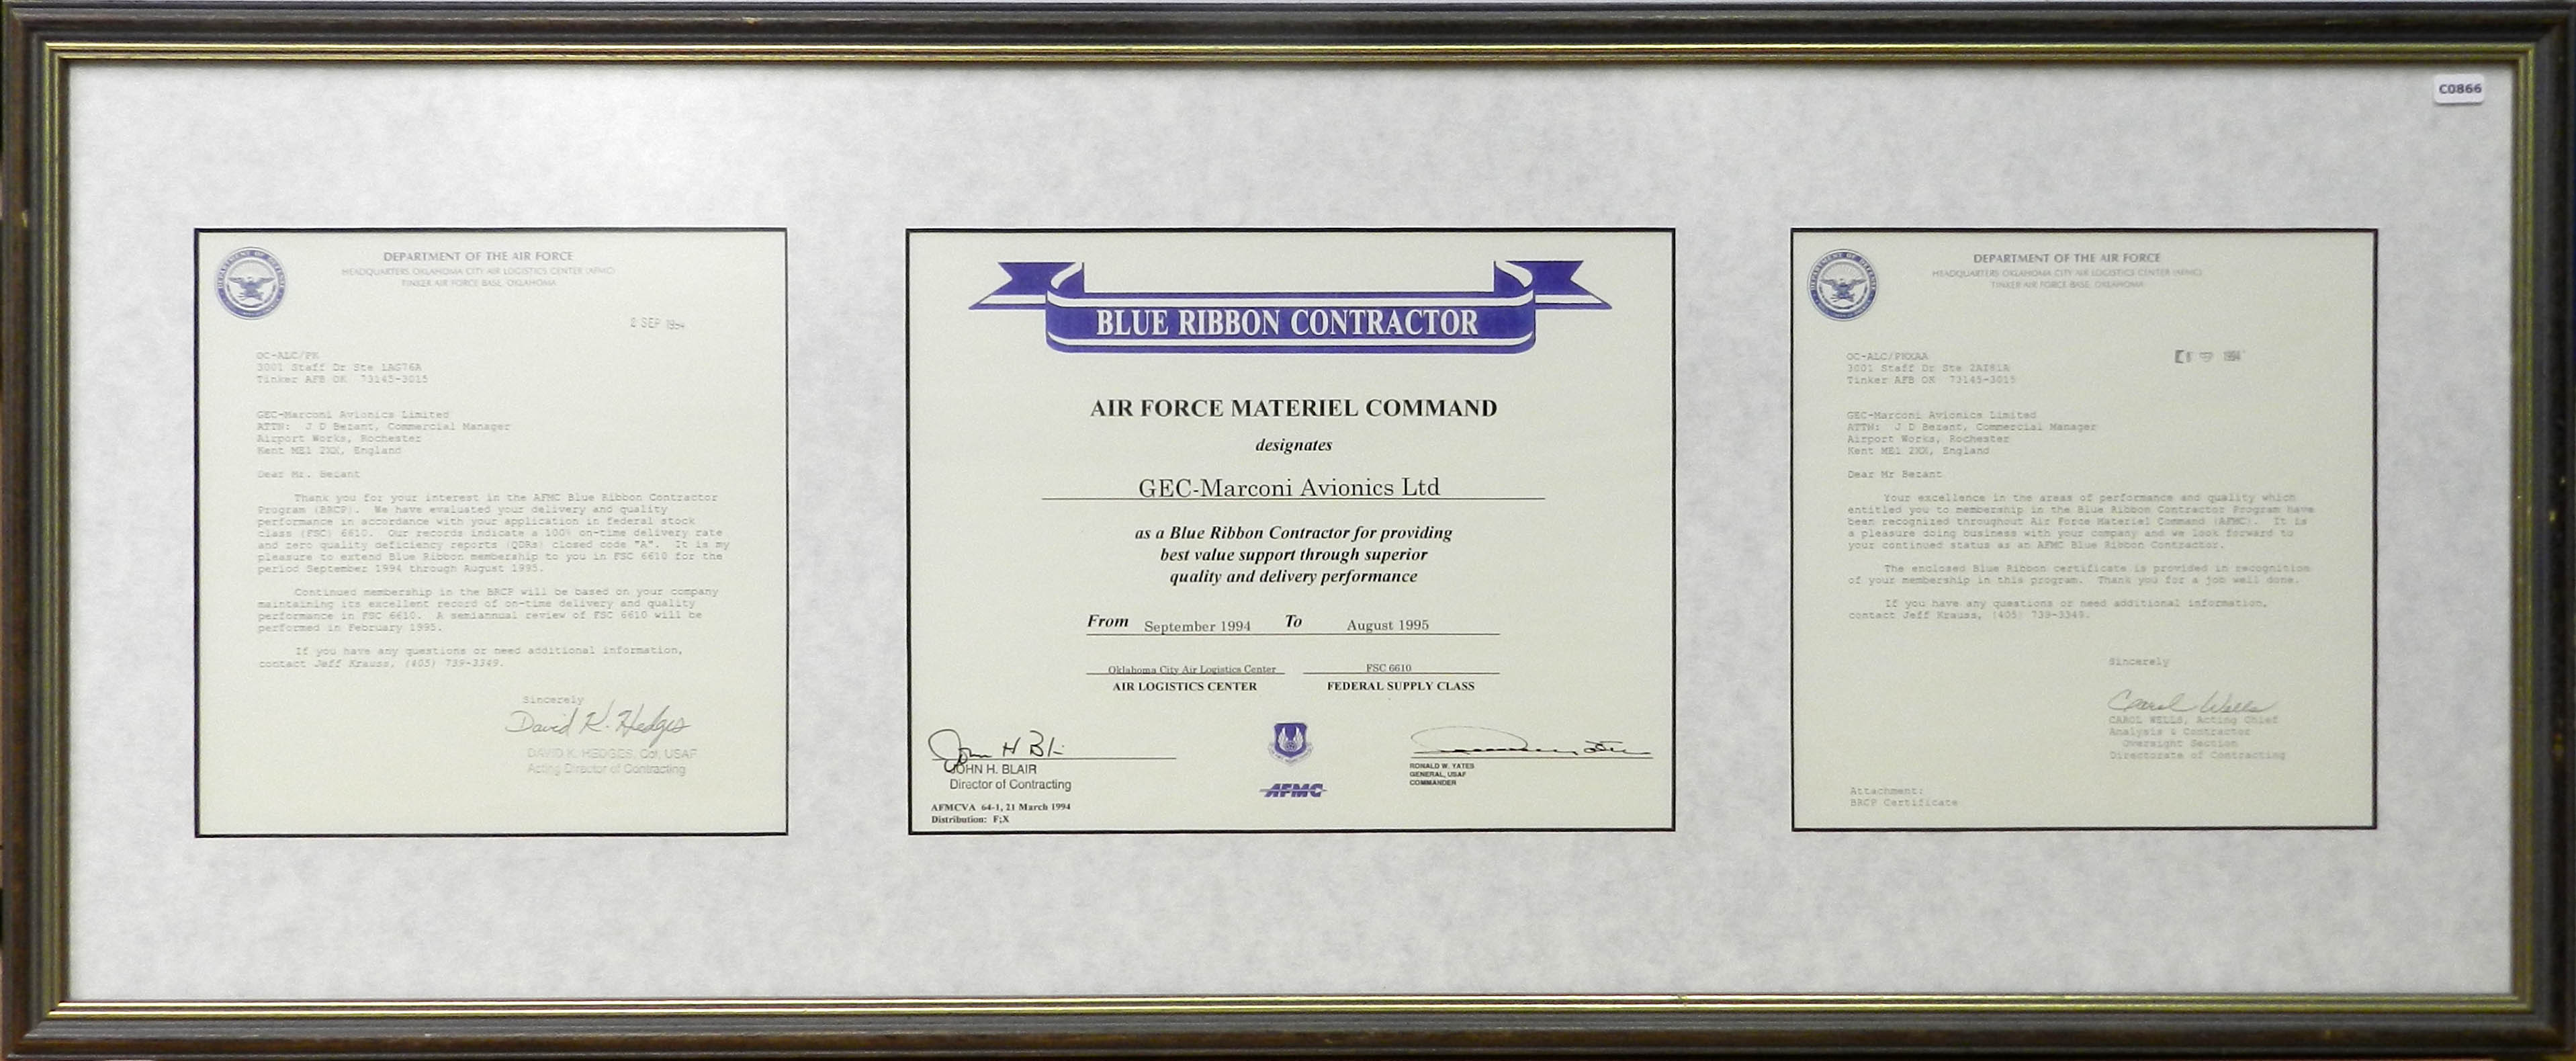 Blue Ribbon Contractor Certificate